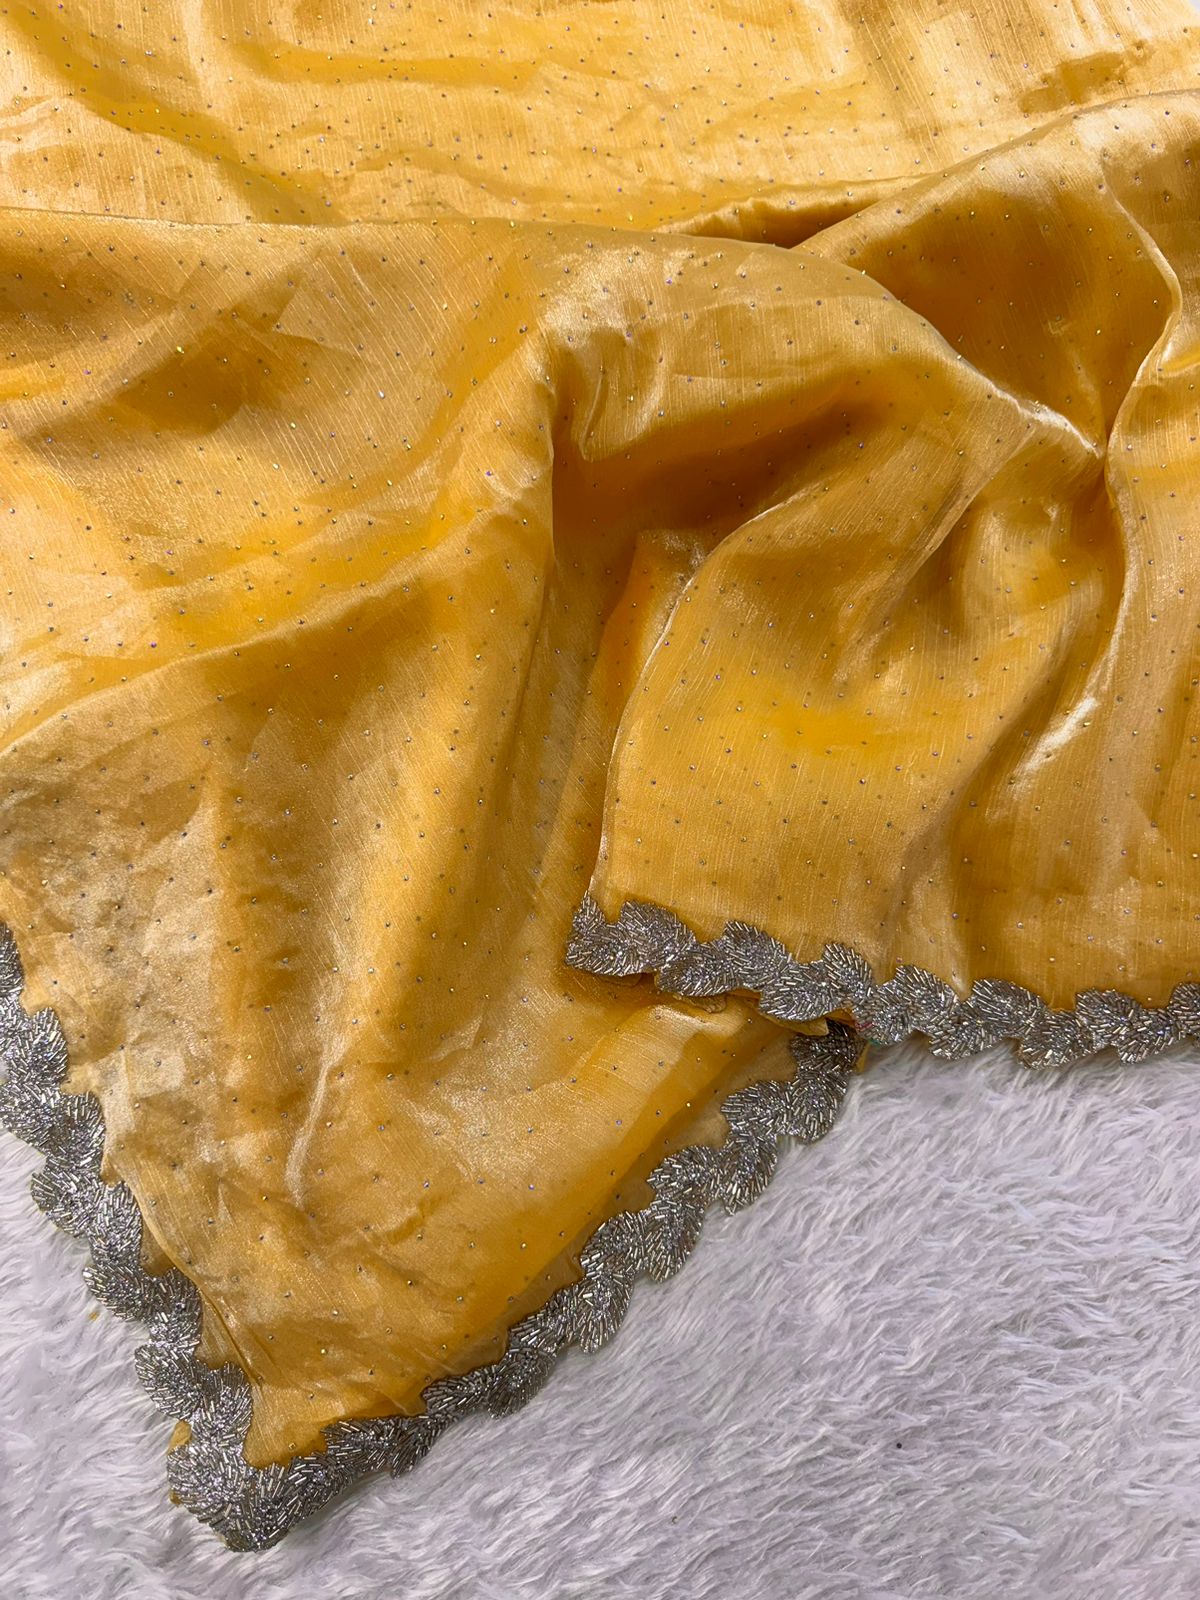 Pure Jharkan Handwork Drapes in Shimmer Silk